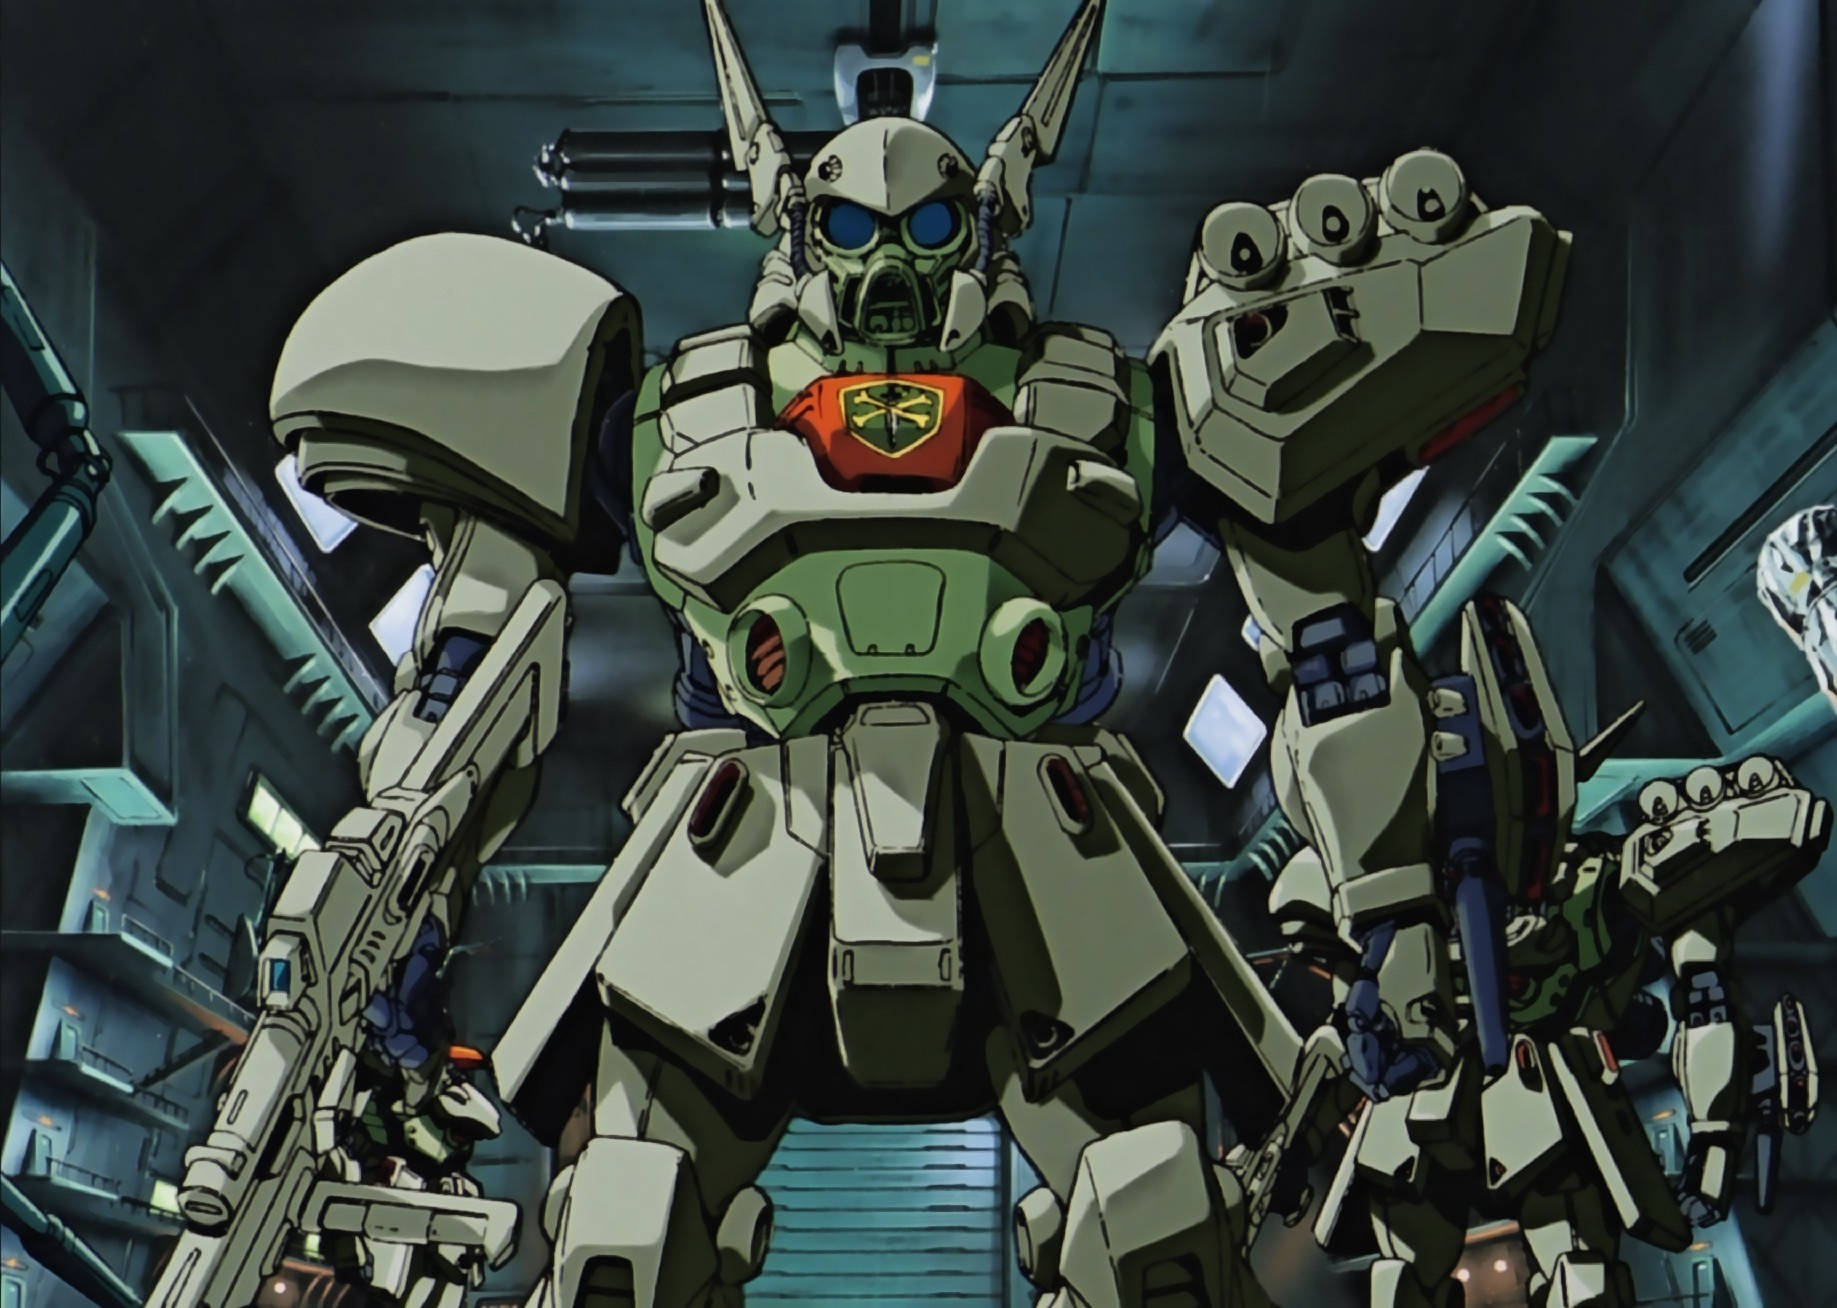 Epic Duel In Space - Mobile Suit Gundam Enemies Wallpaper